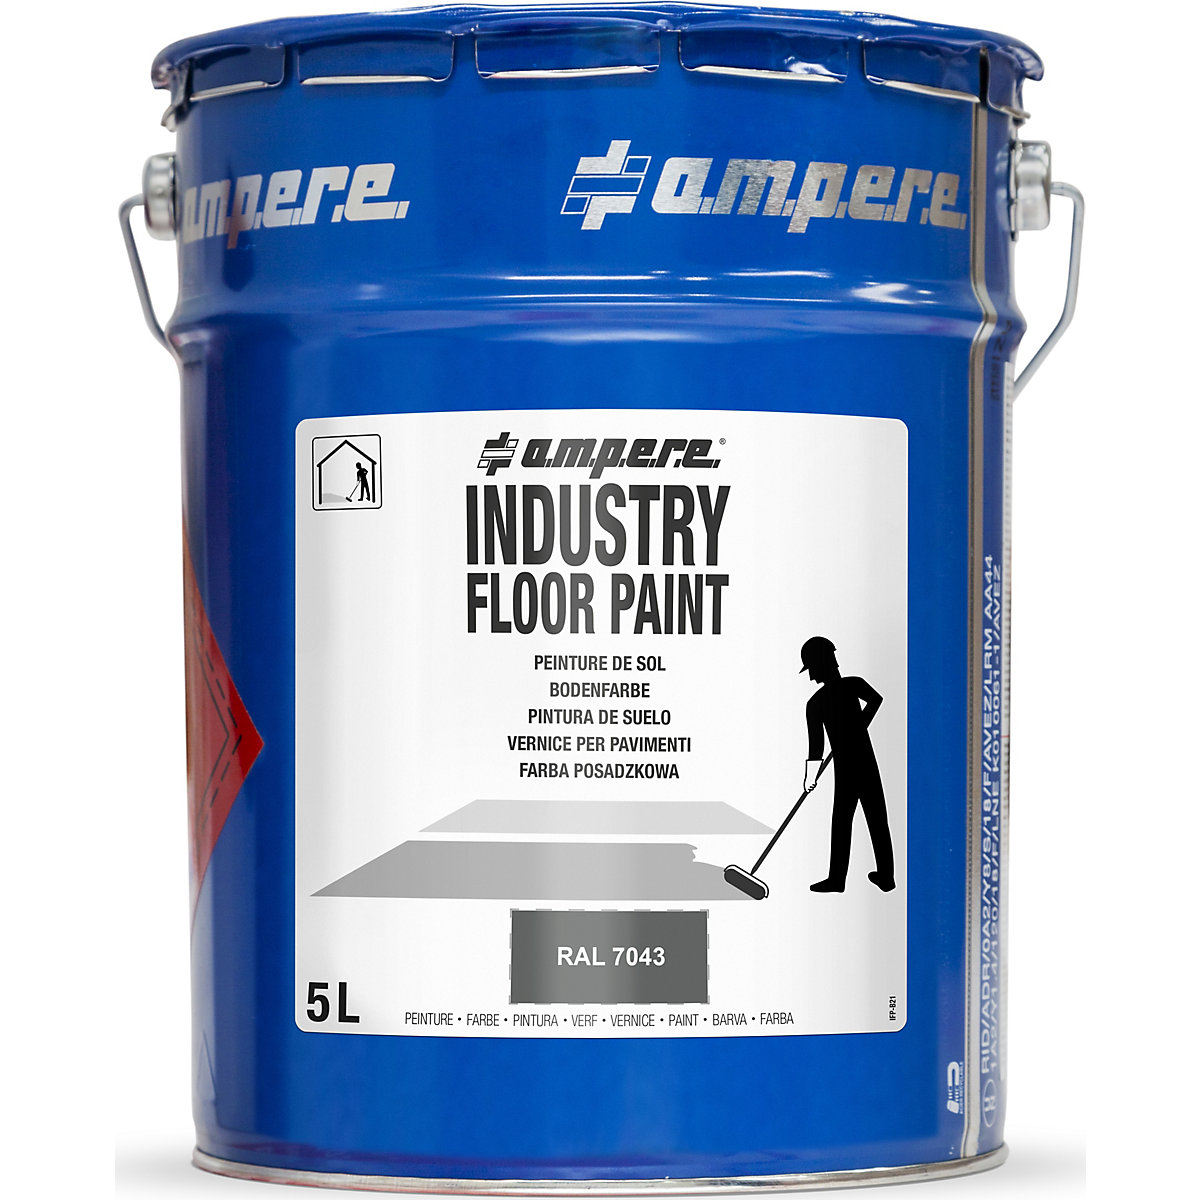 Tinta de marcação para pavimentos Industry Floor Paint® – Ampere